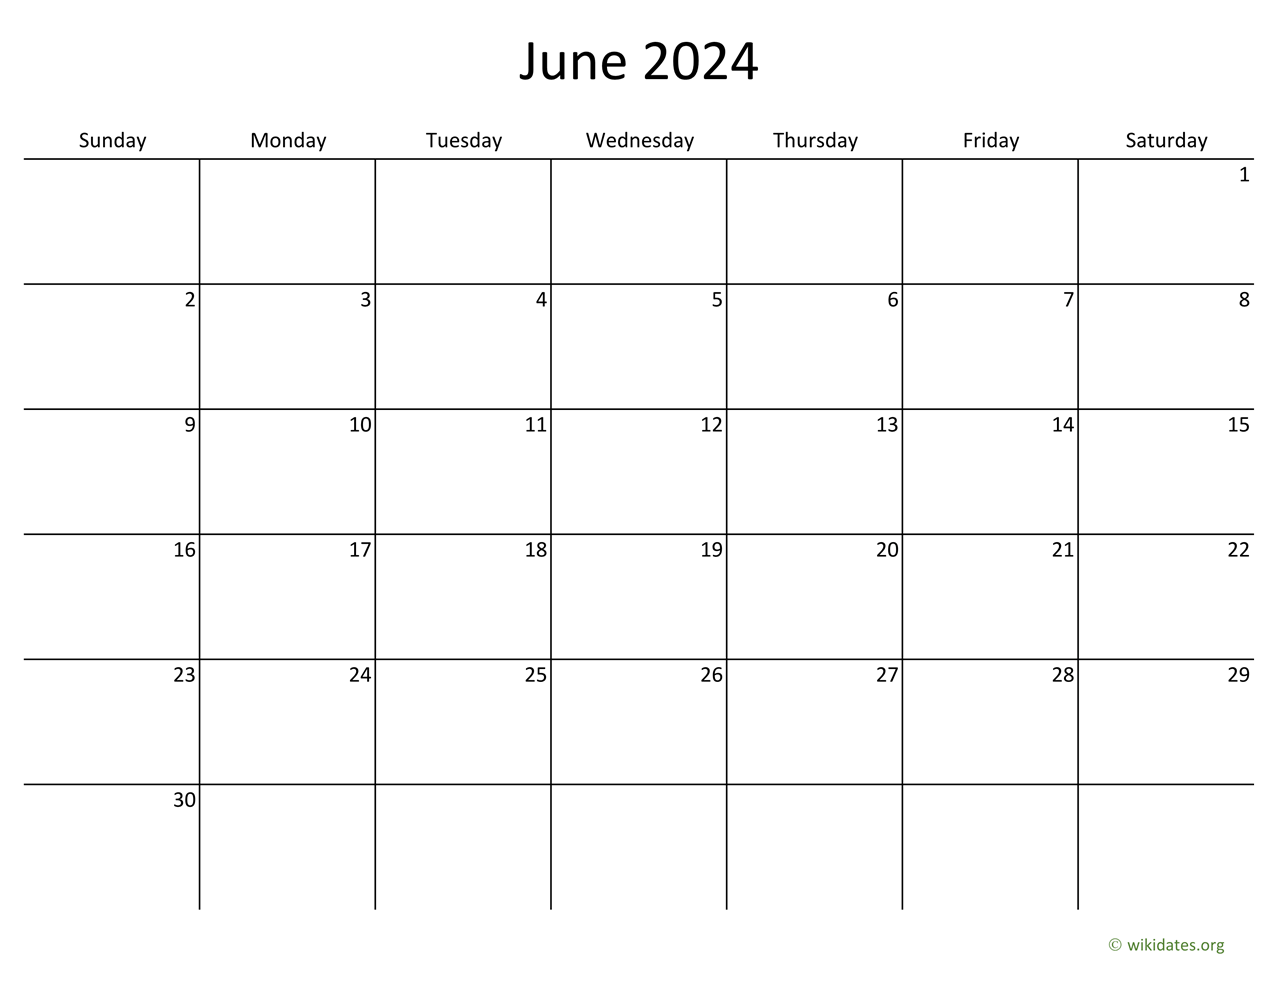 Kohinoor Calendar 2024 June Easy to Use Calendar App 2024